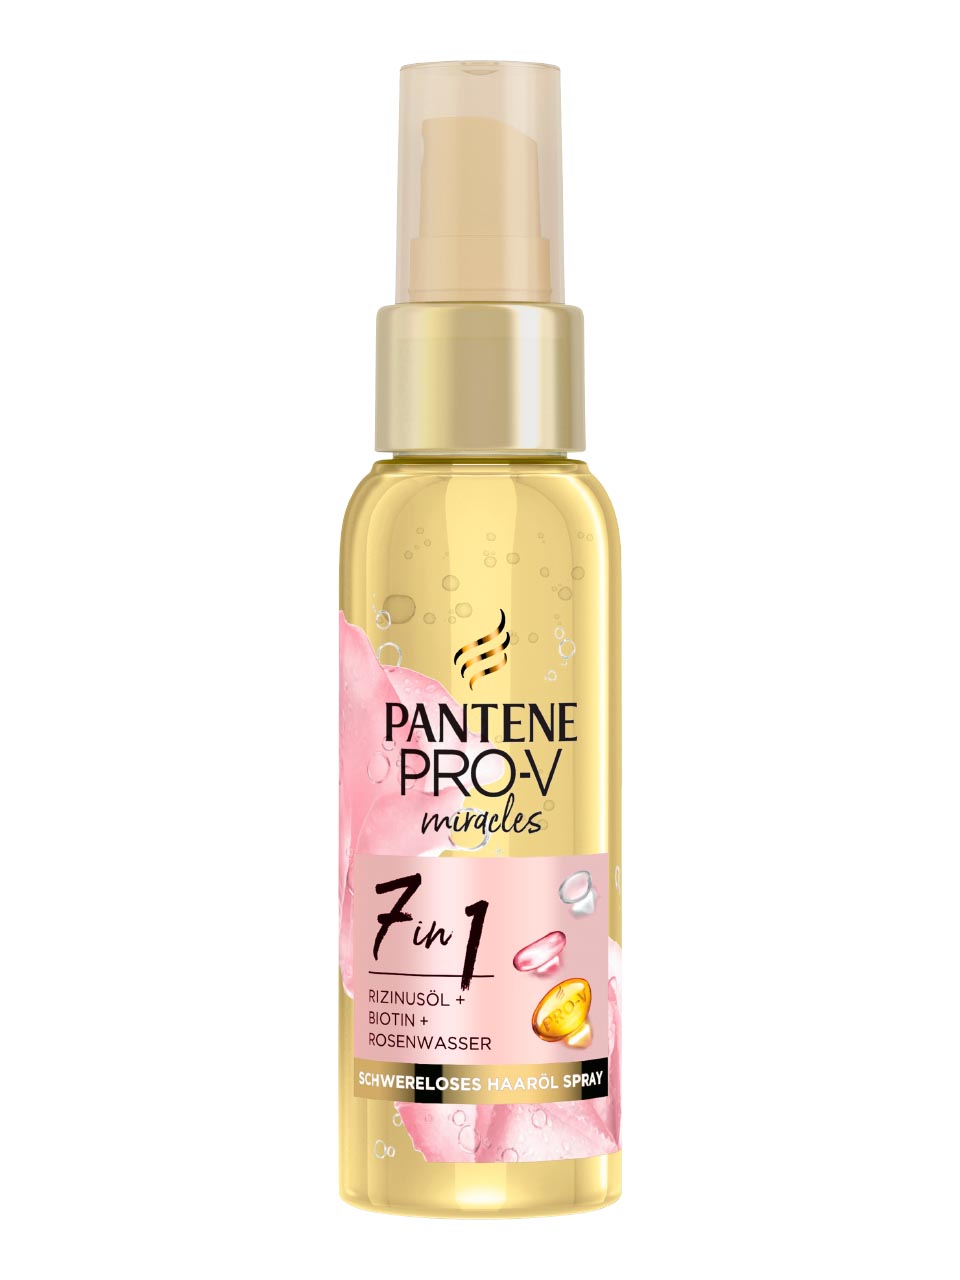 Pantene Pro-V 7-in-1 Hair oil Spray Haartonic Mira. null - onesize - 1